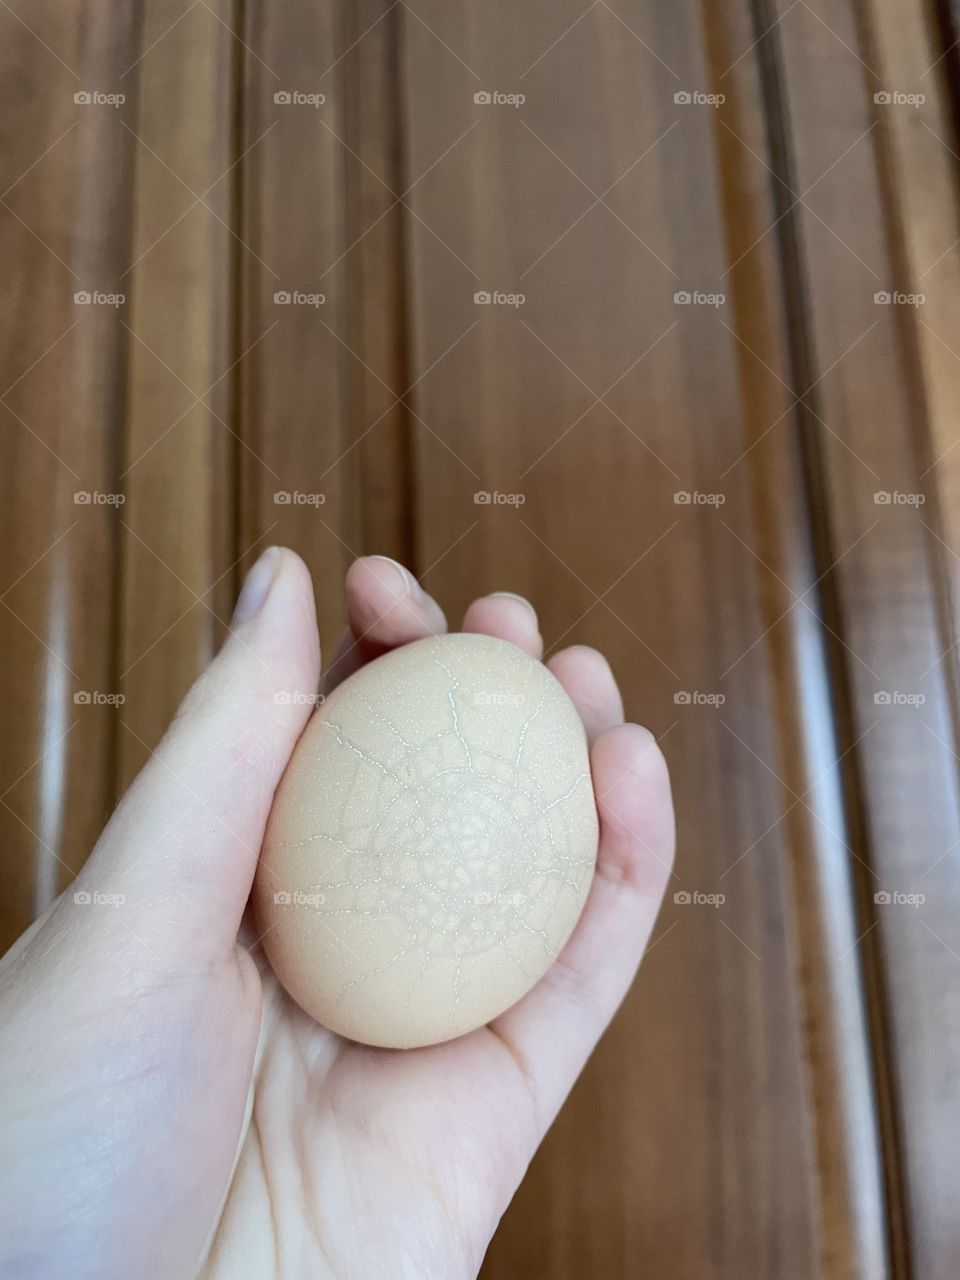 An oddly cracked egg. 